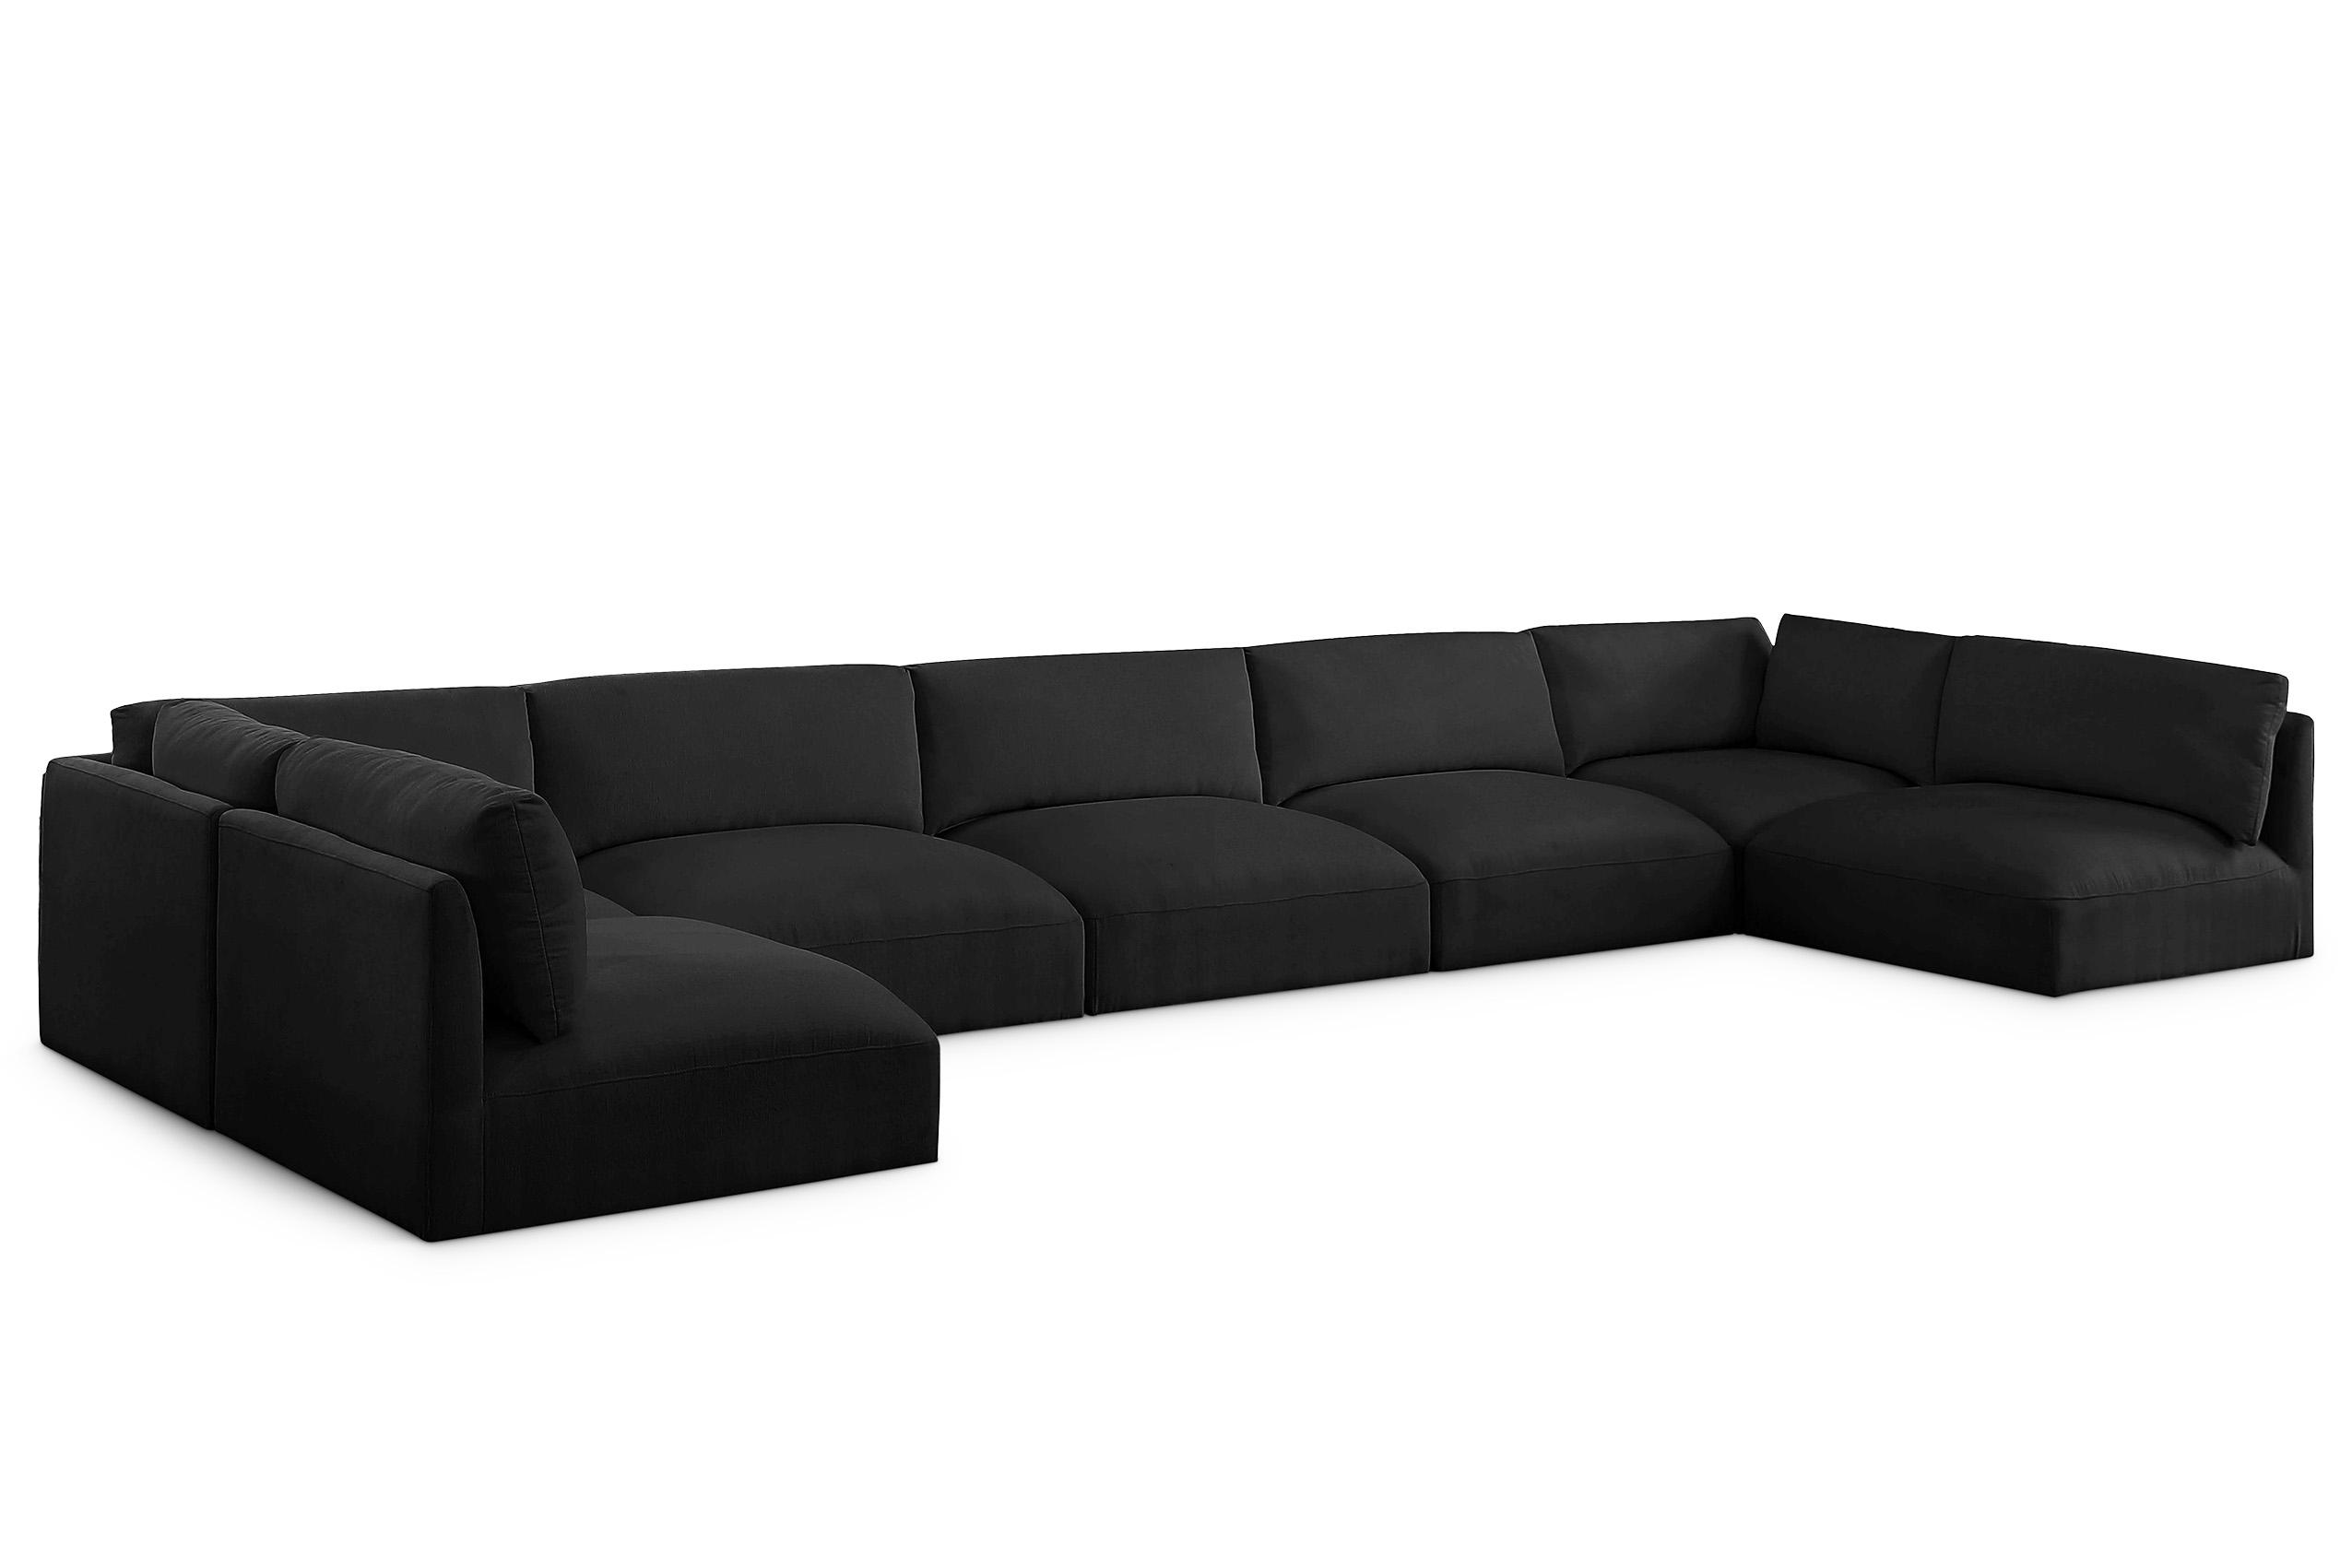 Contemporary, Modern Modular Sectional Sofa EASE 696Black-Sec7B 696Black-Sec7B in Black Fabric